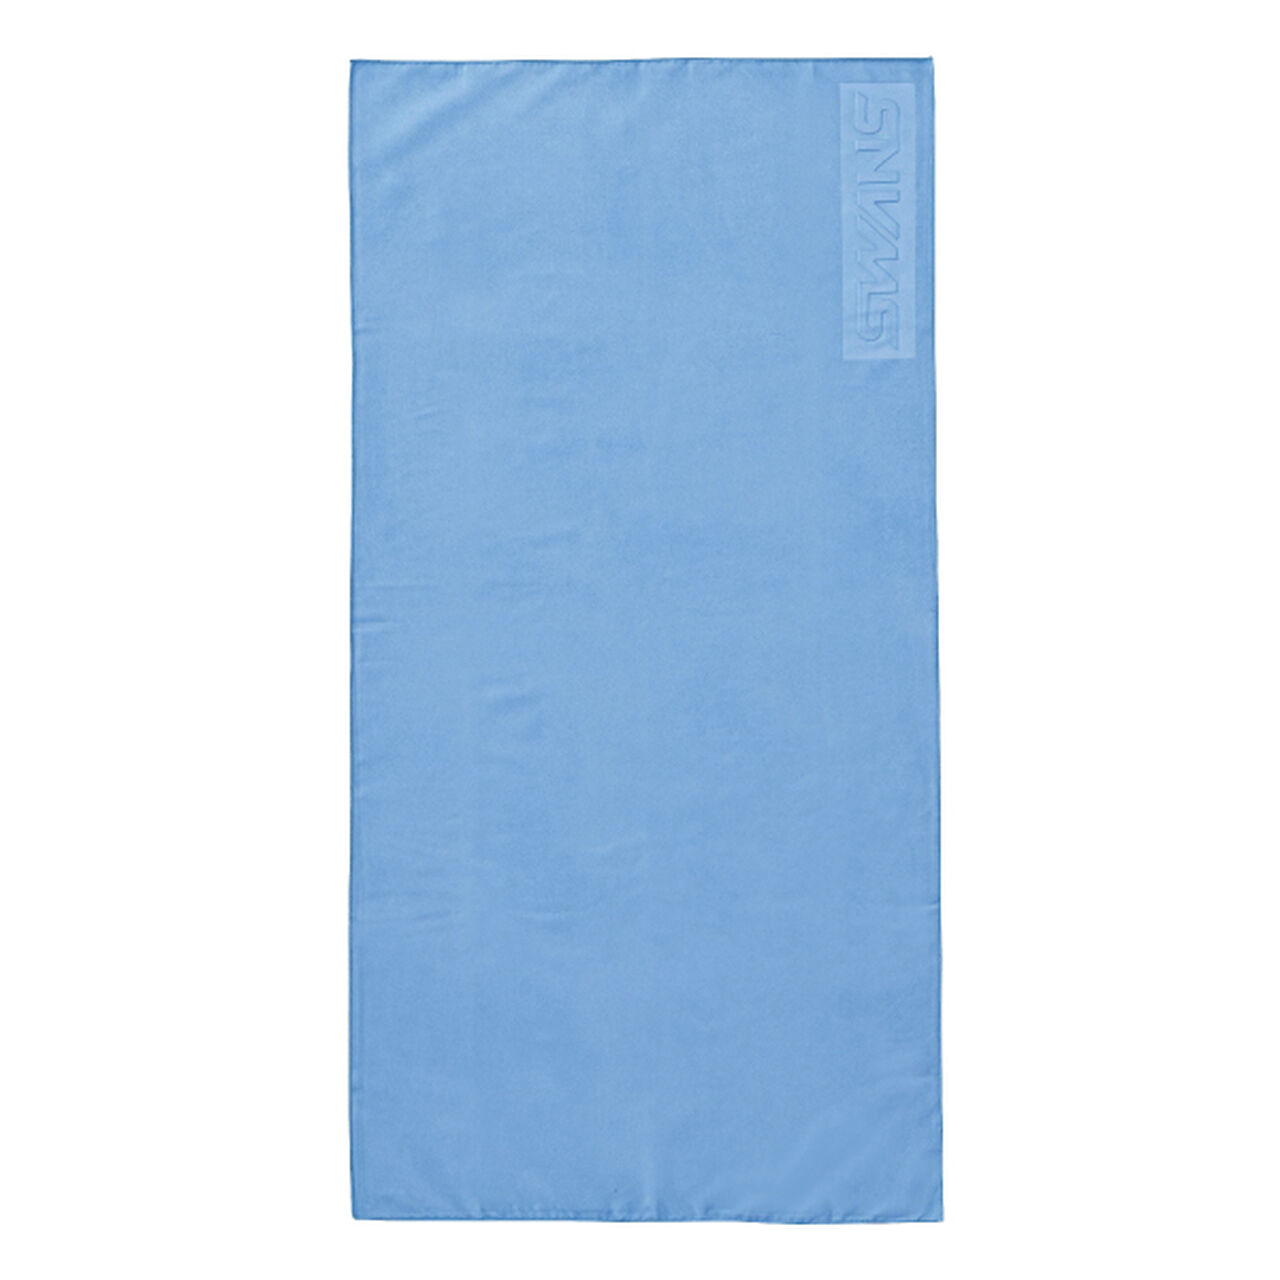 SA-28 Blue microfiber towel L size,Opt2, large image number 0